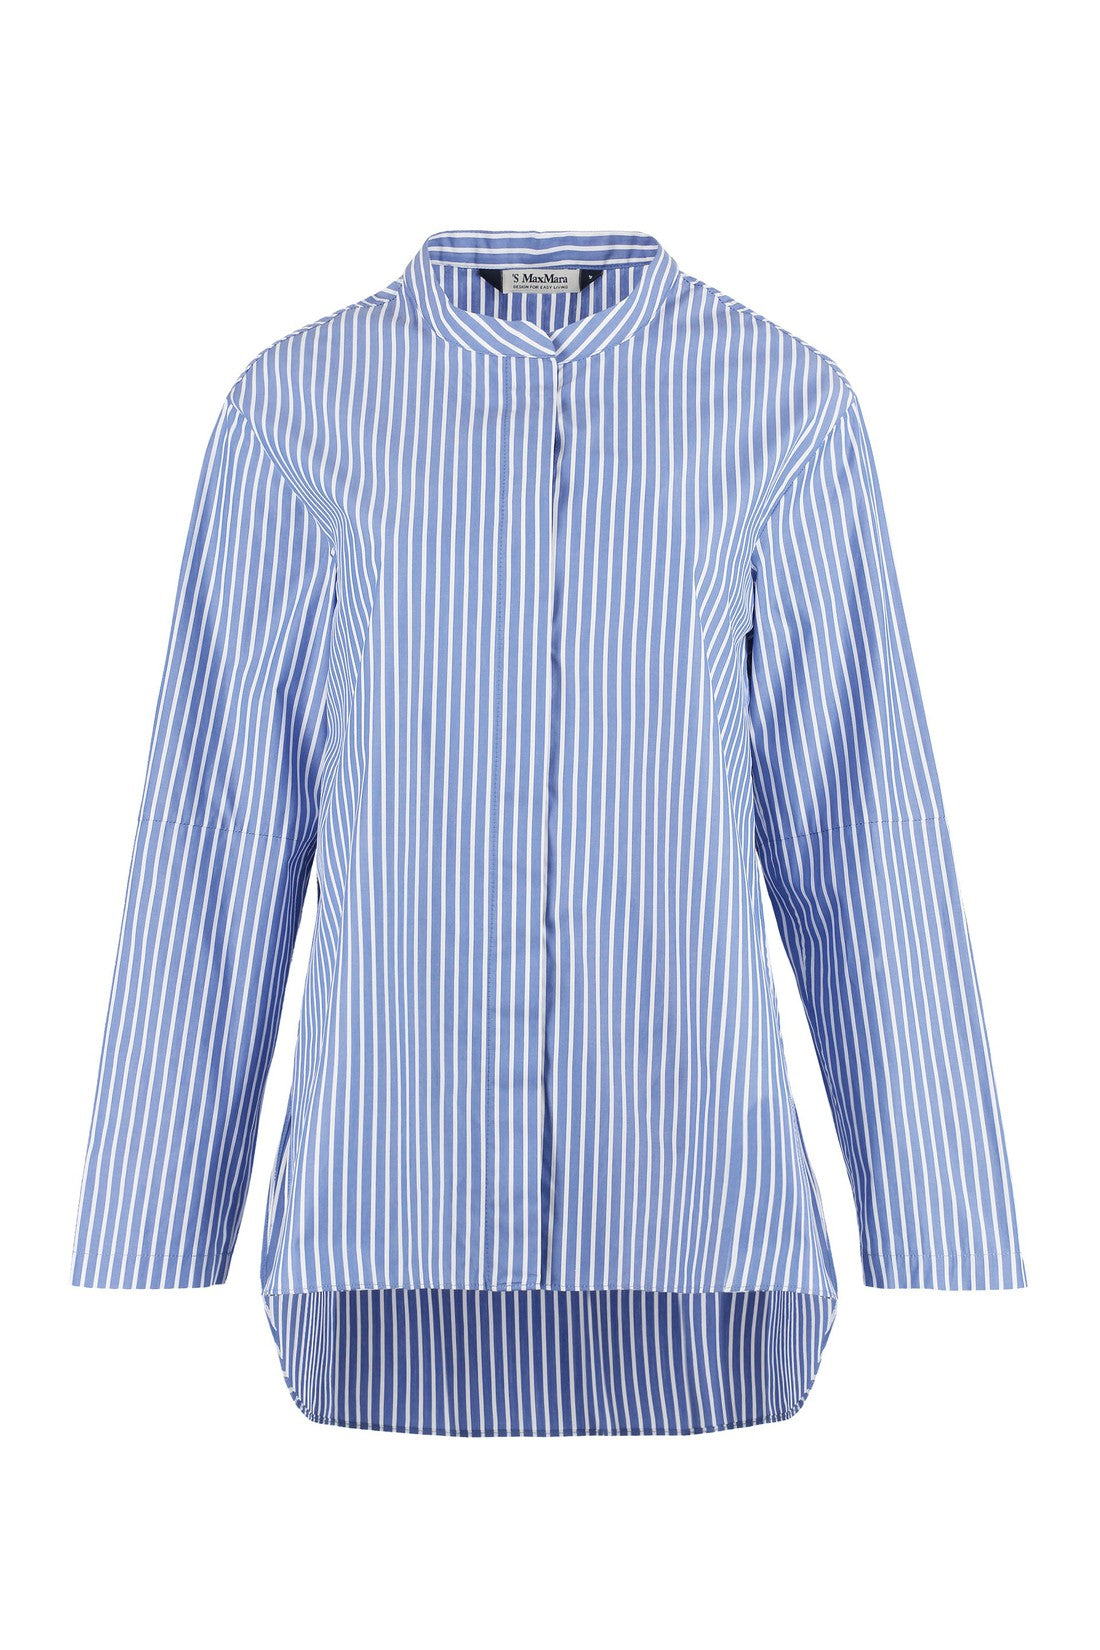 S MAX MARA-OUTLET-SALE-Linda striped cotton shirt-ARCHIVIST